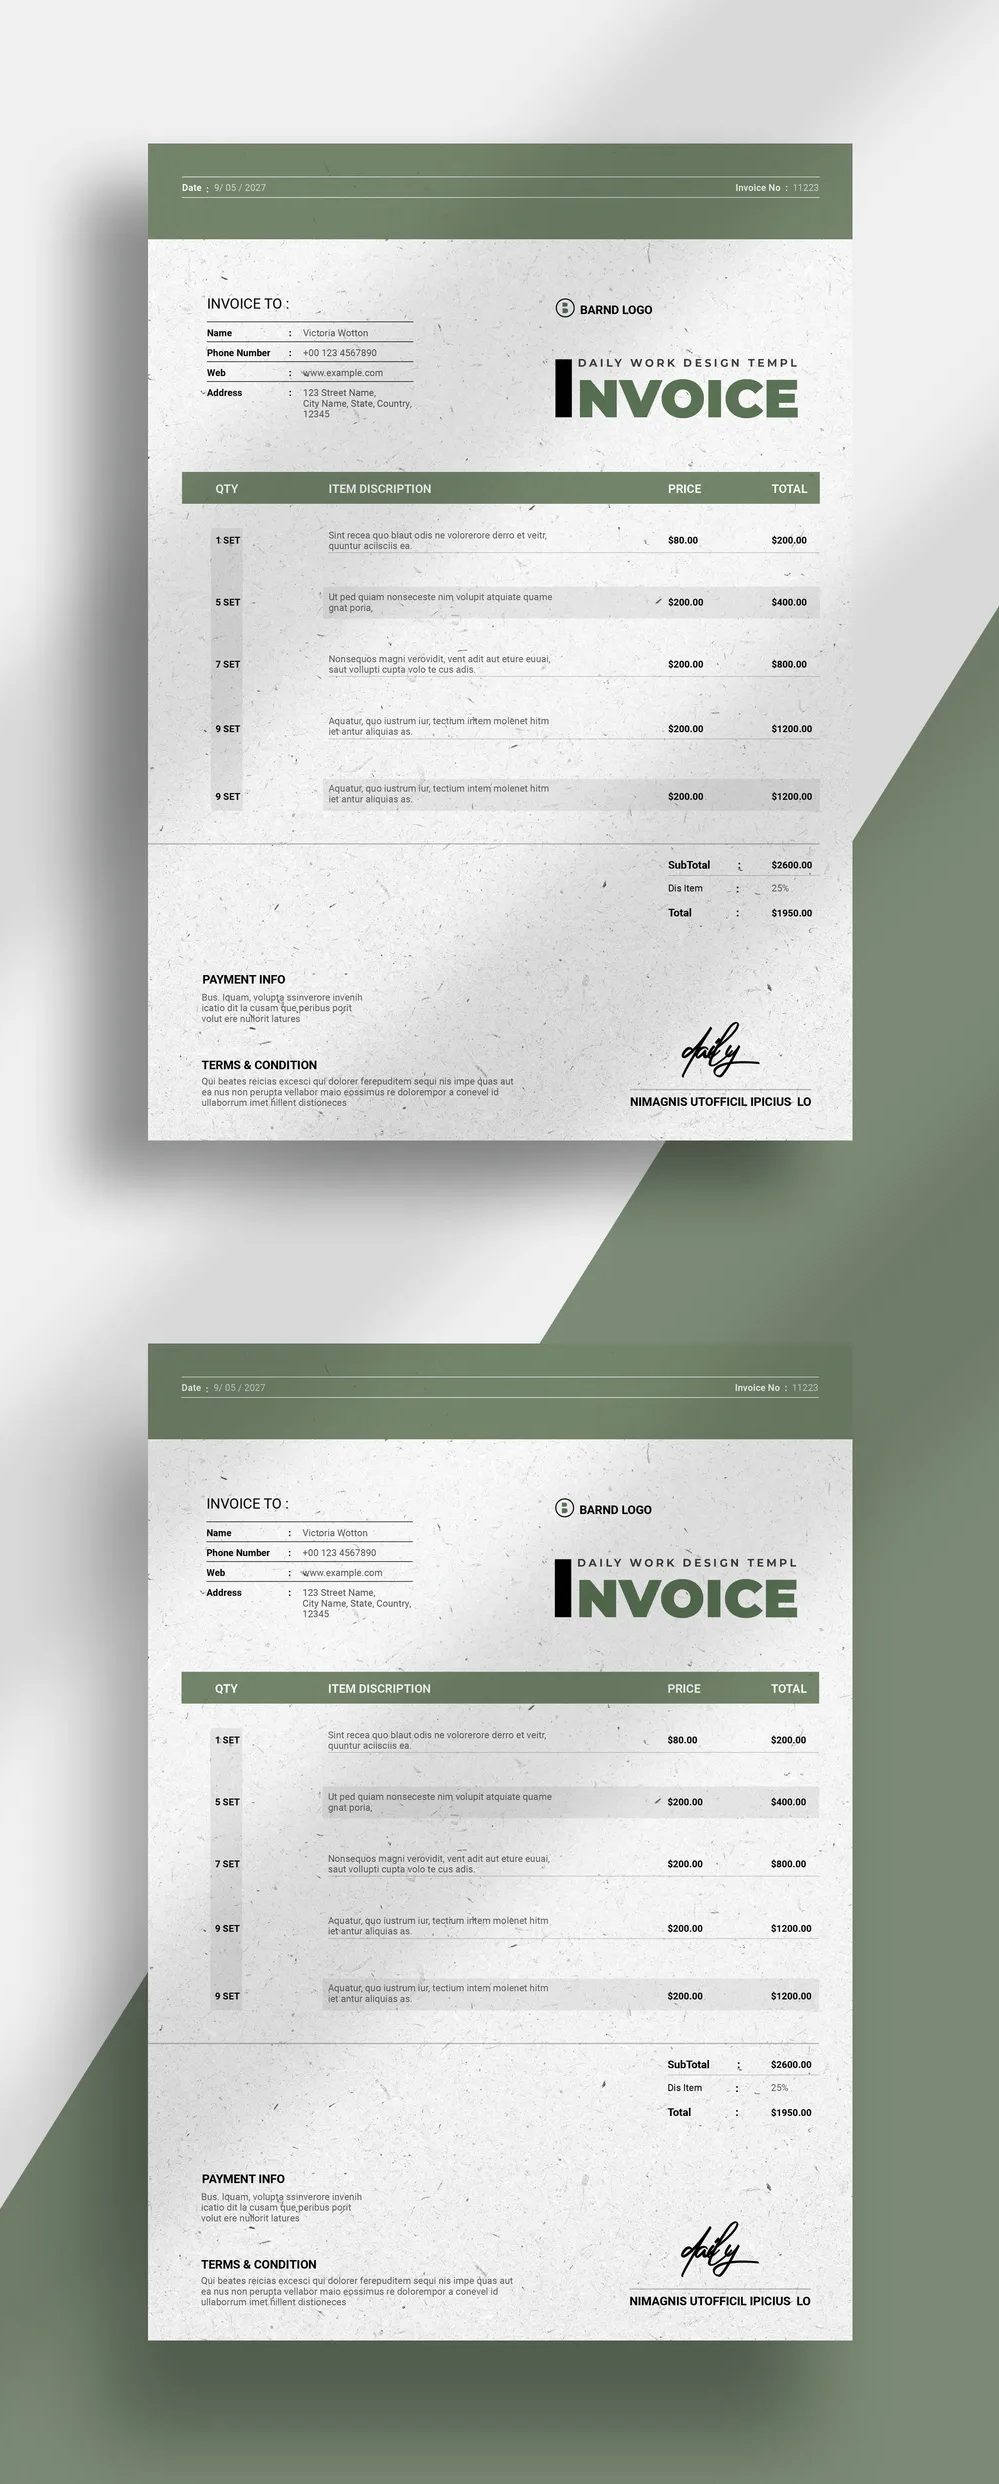 Adobestock - Invoice Flyer Template 723774558